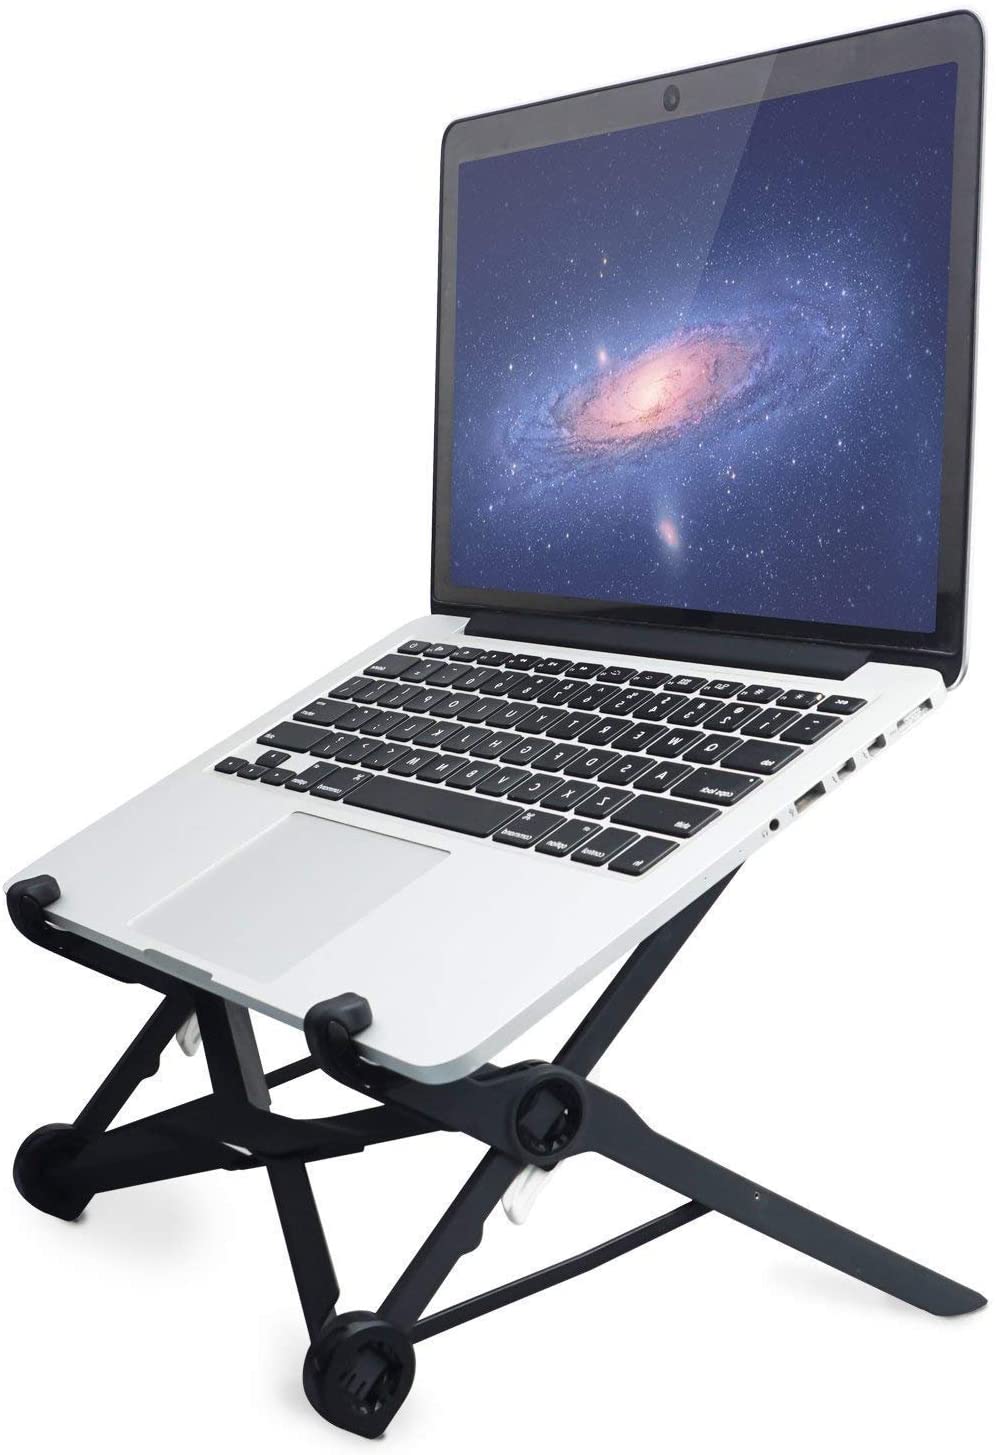 BASE12 Portable Laptop Stand Foldable Adjustable Notebook Holder for PC Macbook